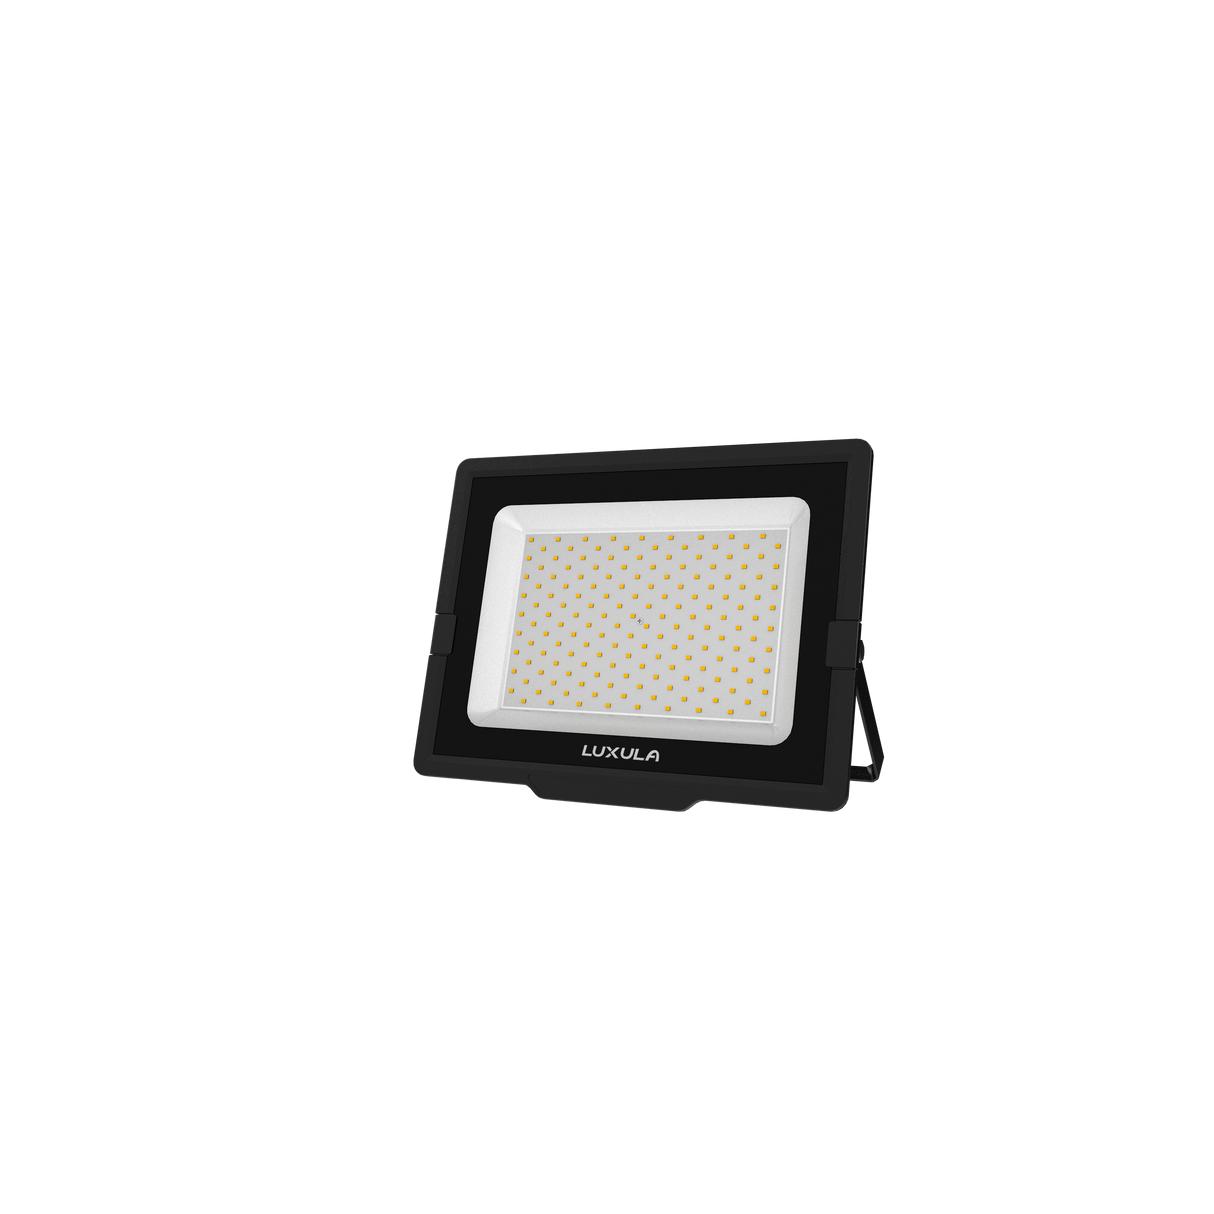 LED-Fluter, 150 W, 3000 K (warmweiß), 15000 lm, schwarz, IP65, TÜV-geprüft